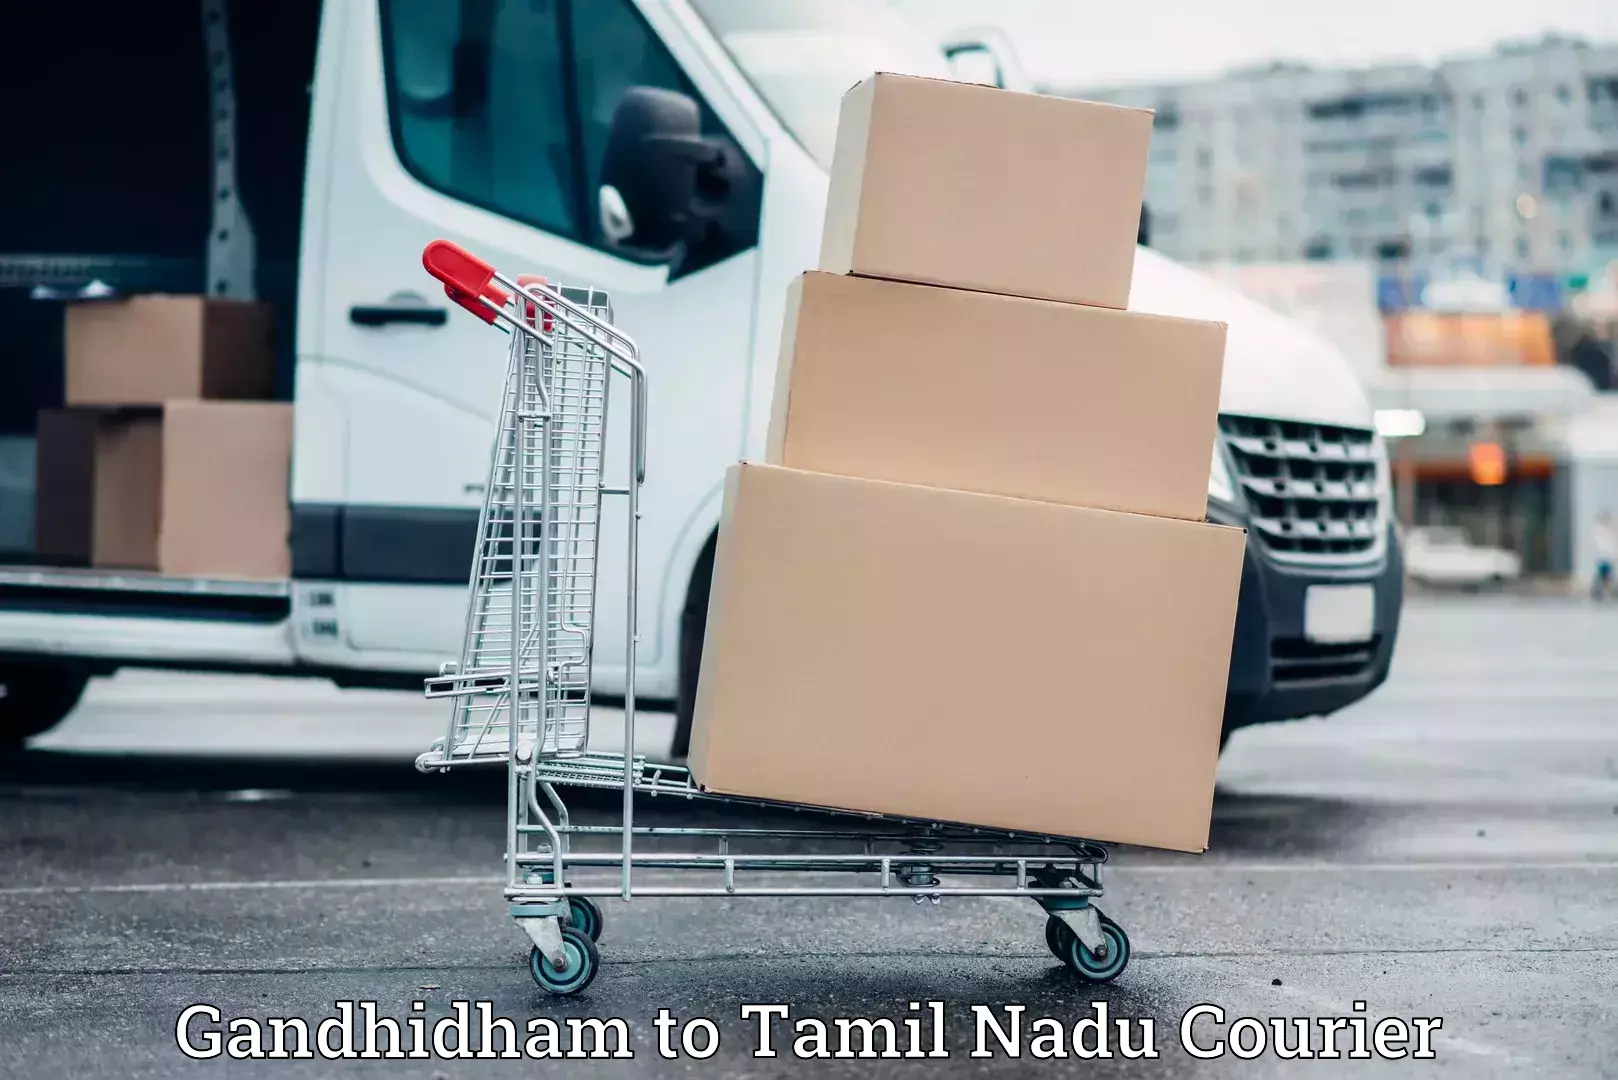 Professional moving company Gandhidham to Ennore Port Chennai